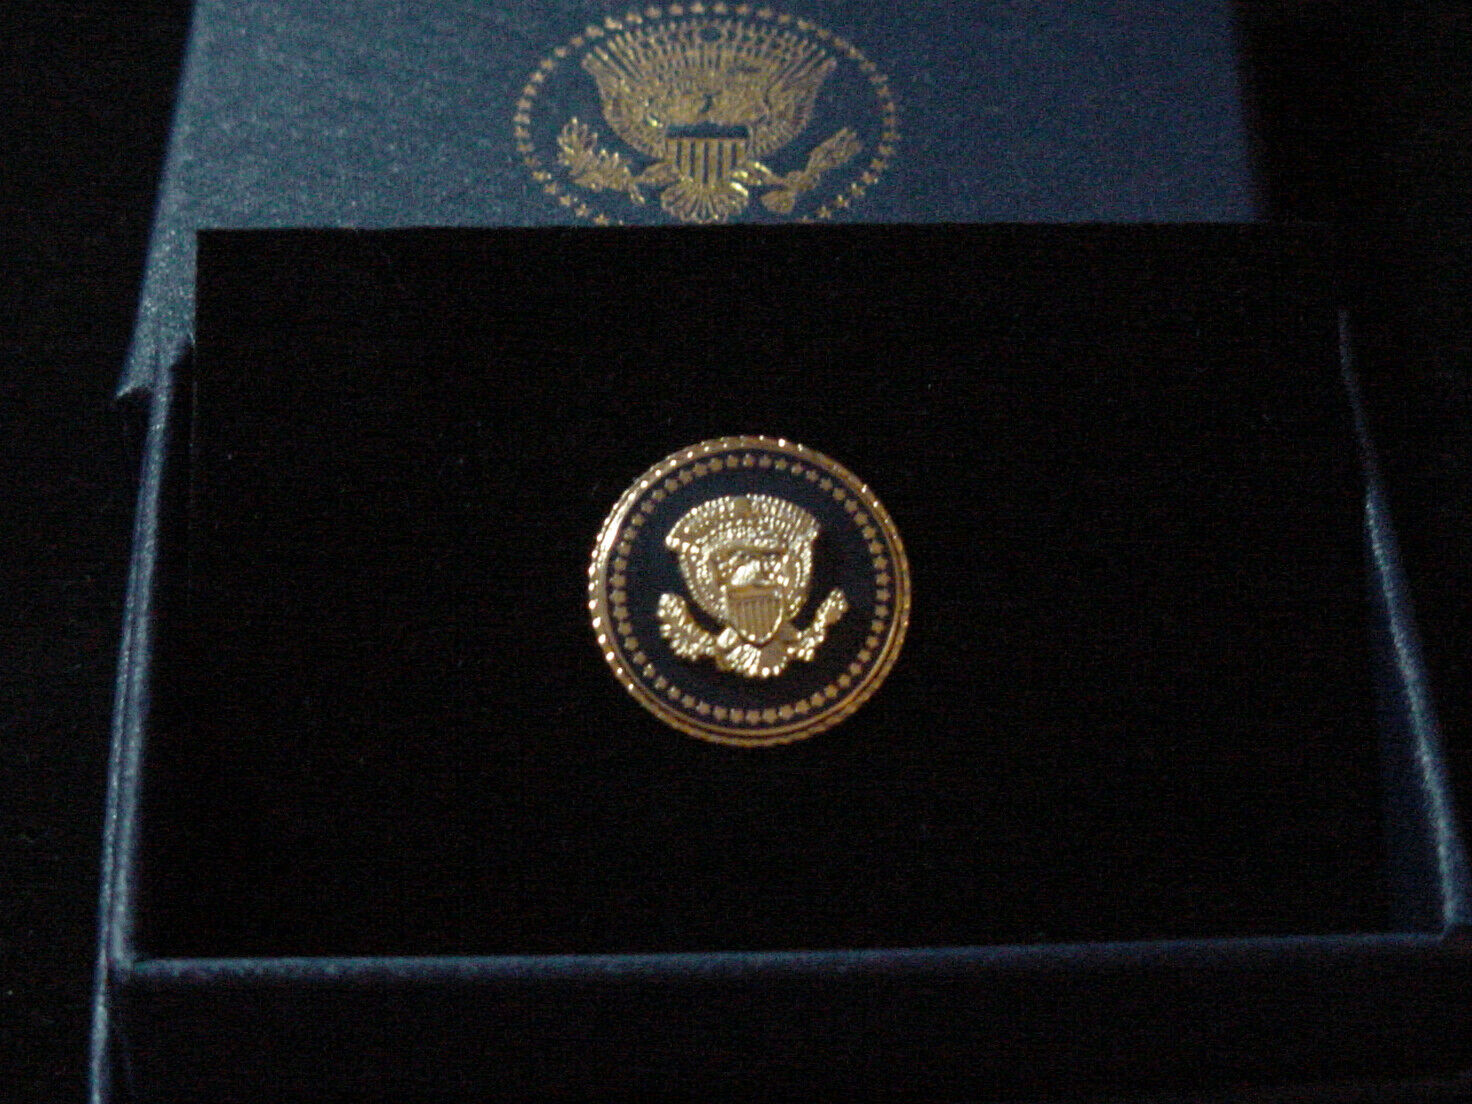 President TRUMP Lapel Pin - Presidential seal Lapel Pin  (gold color)